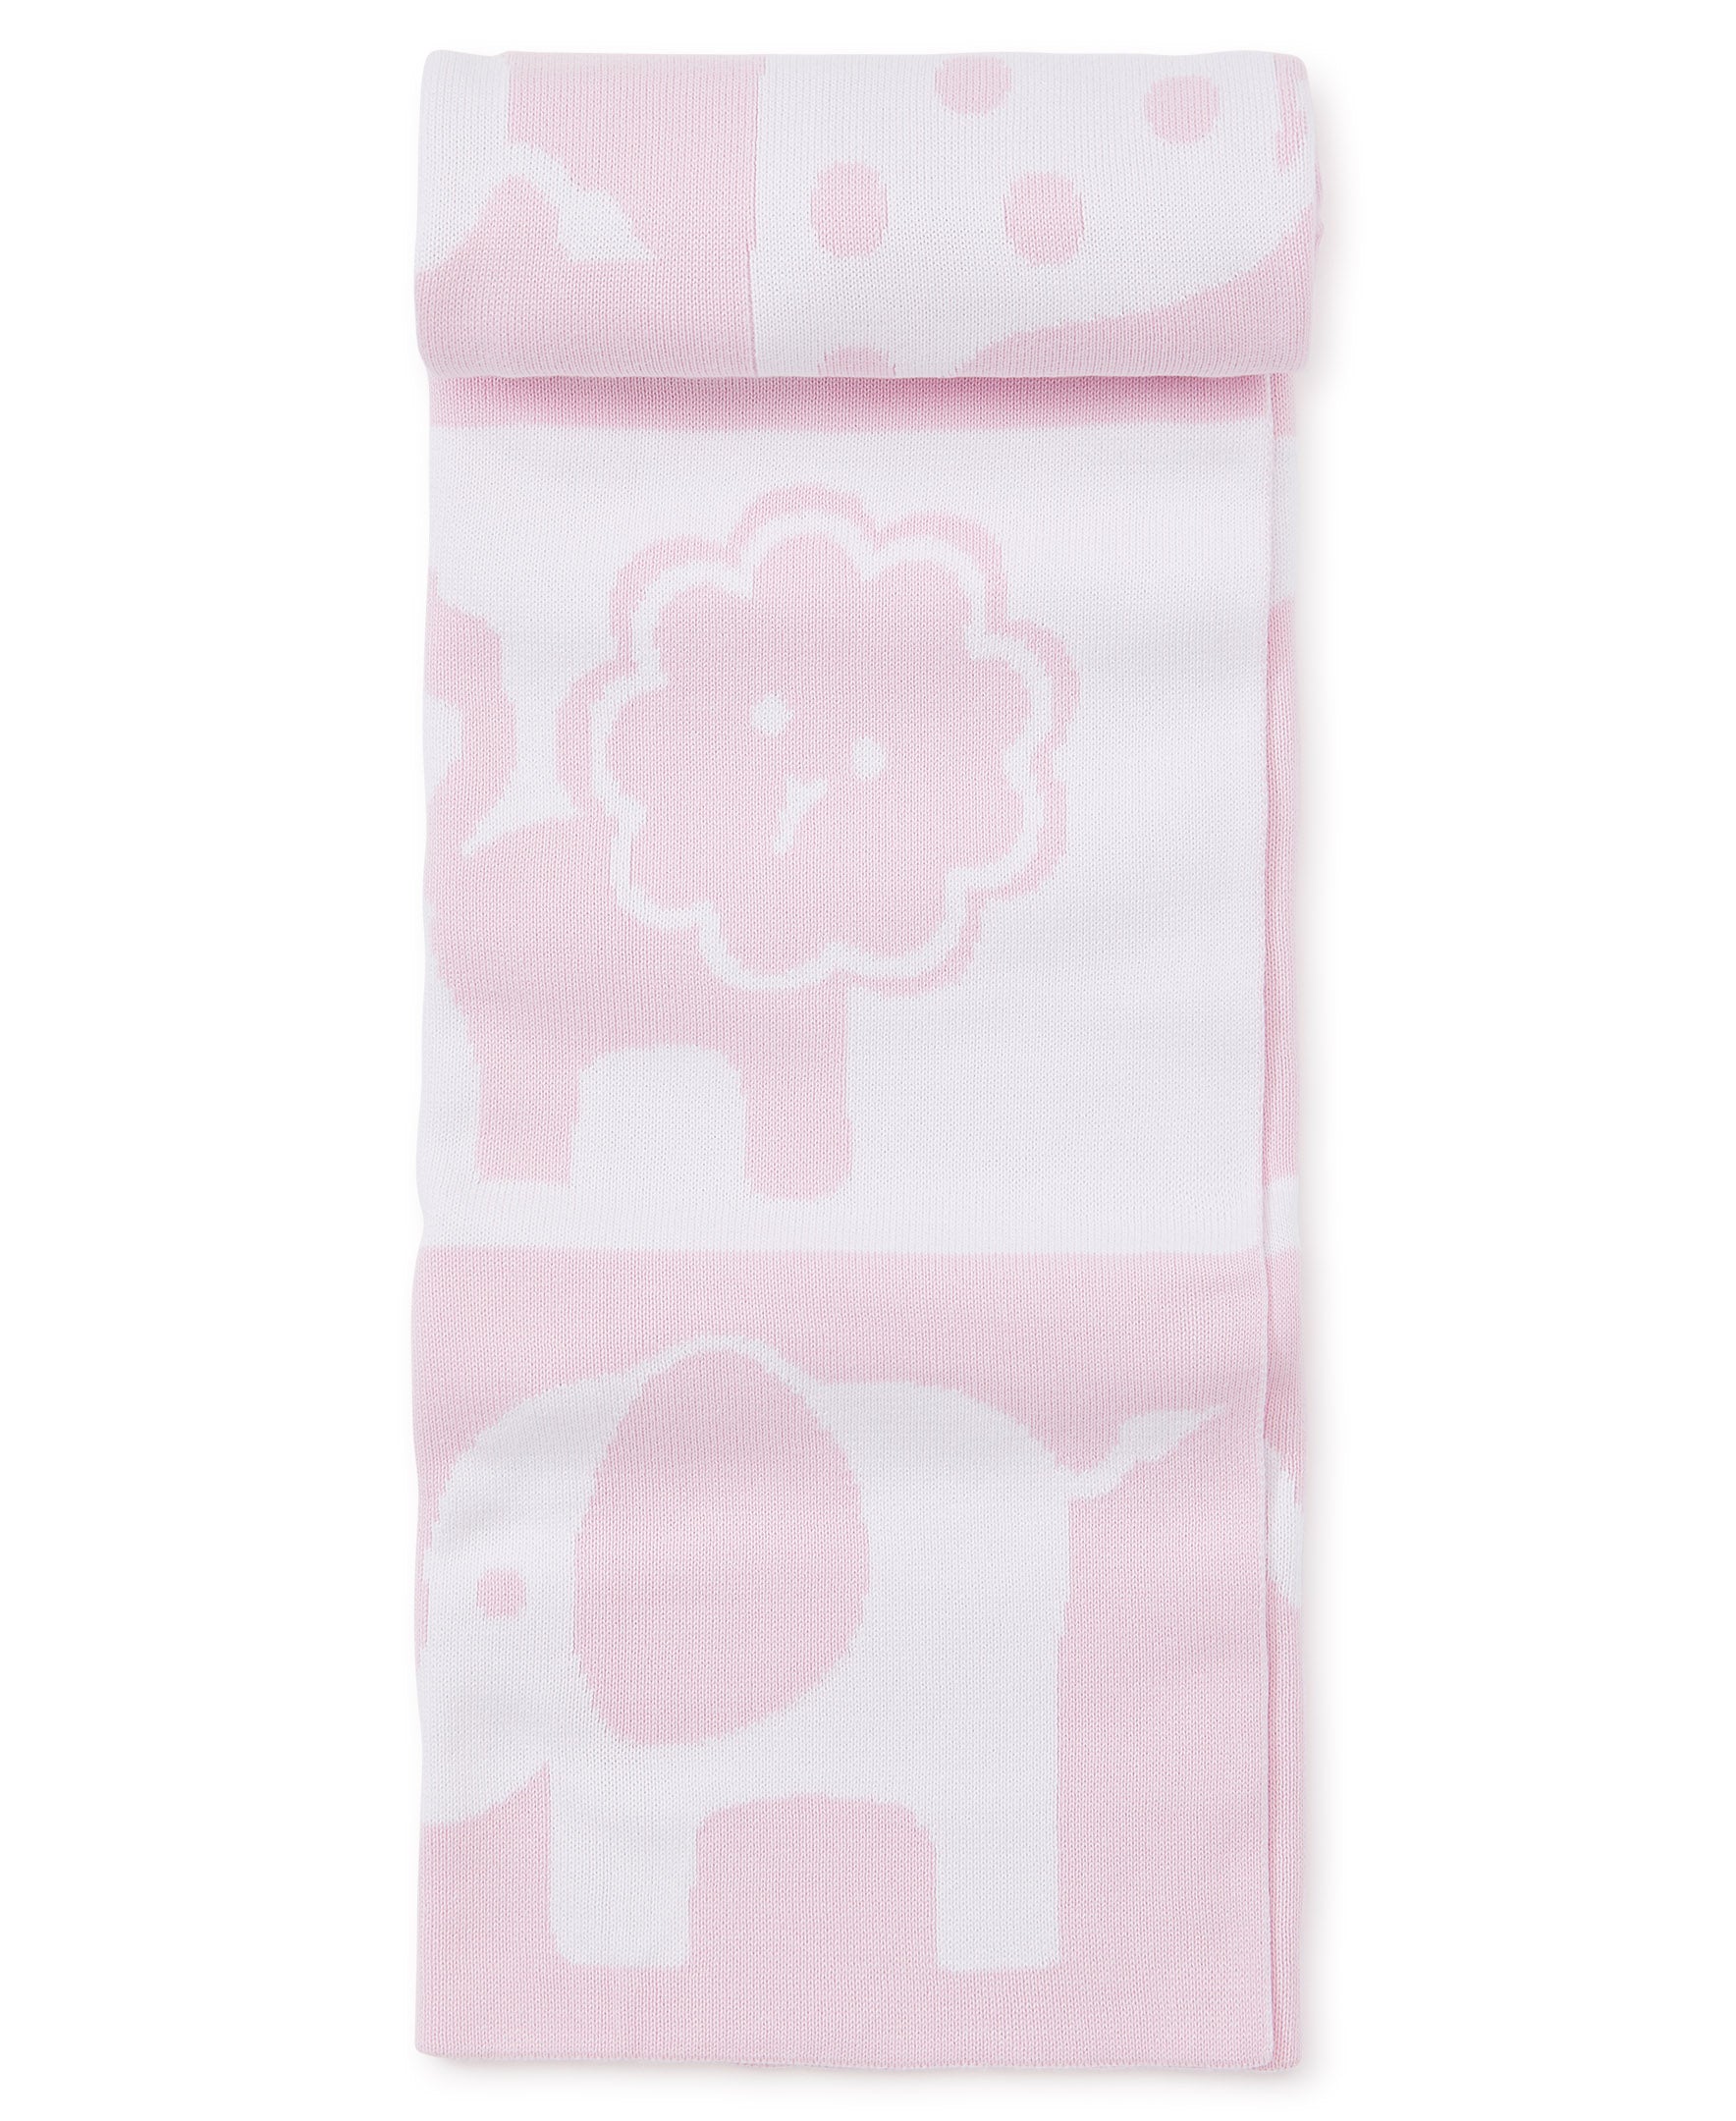 Pink Jungle Knit Novelty Blanket - Kissy Kissy